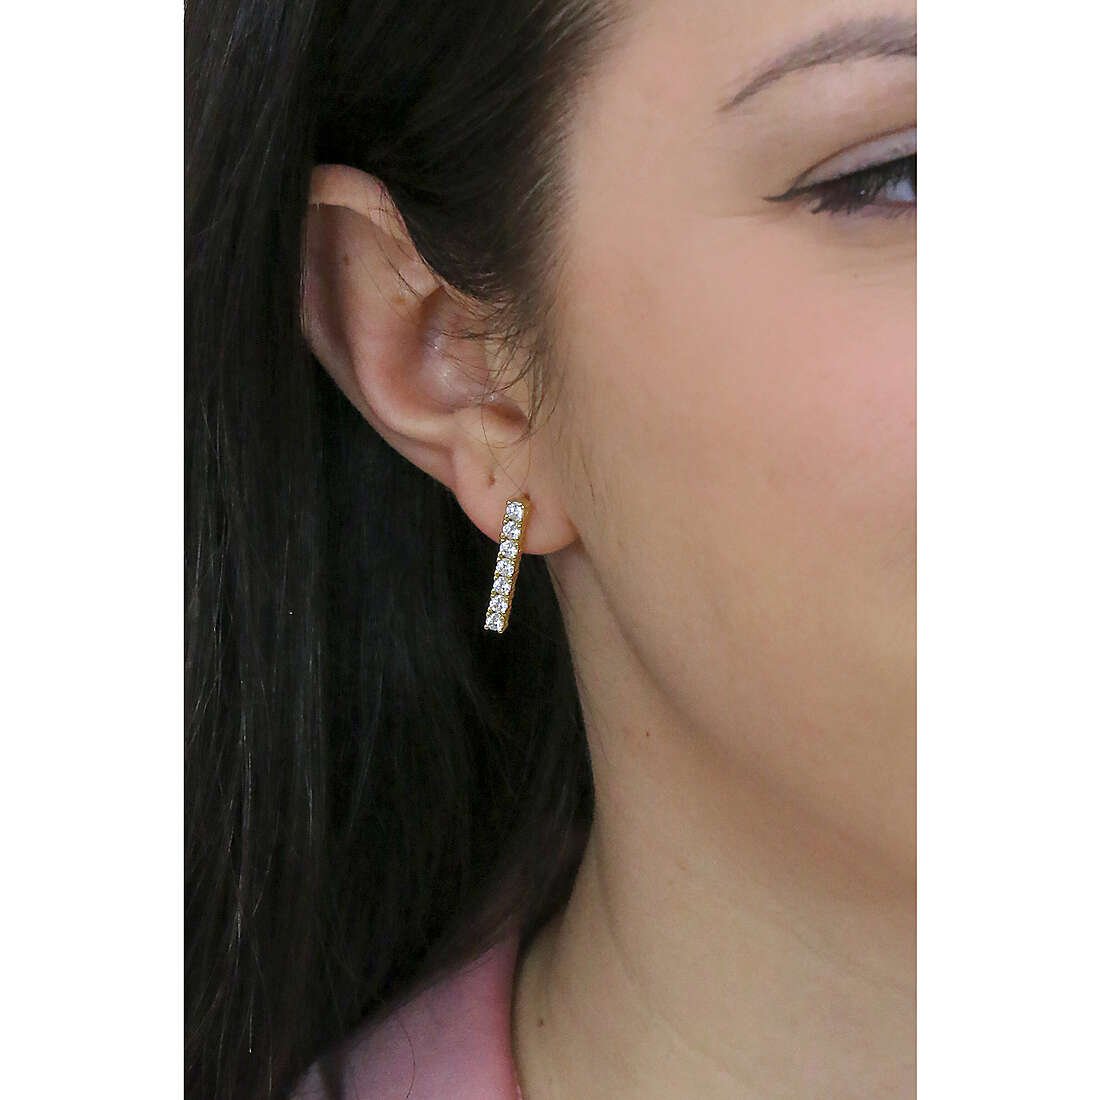 Morellato earrings Scintille woman SAQF08 wearing